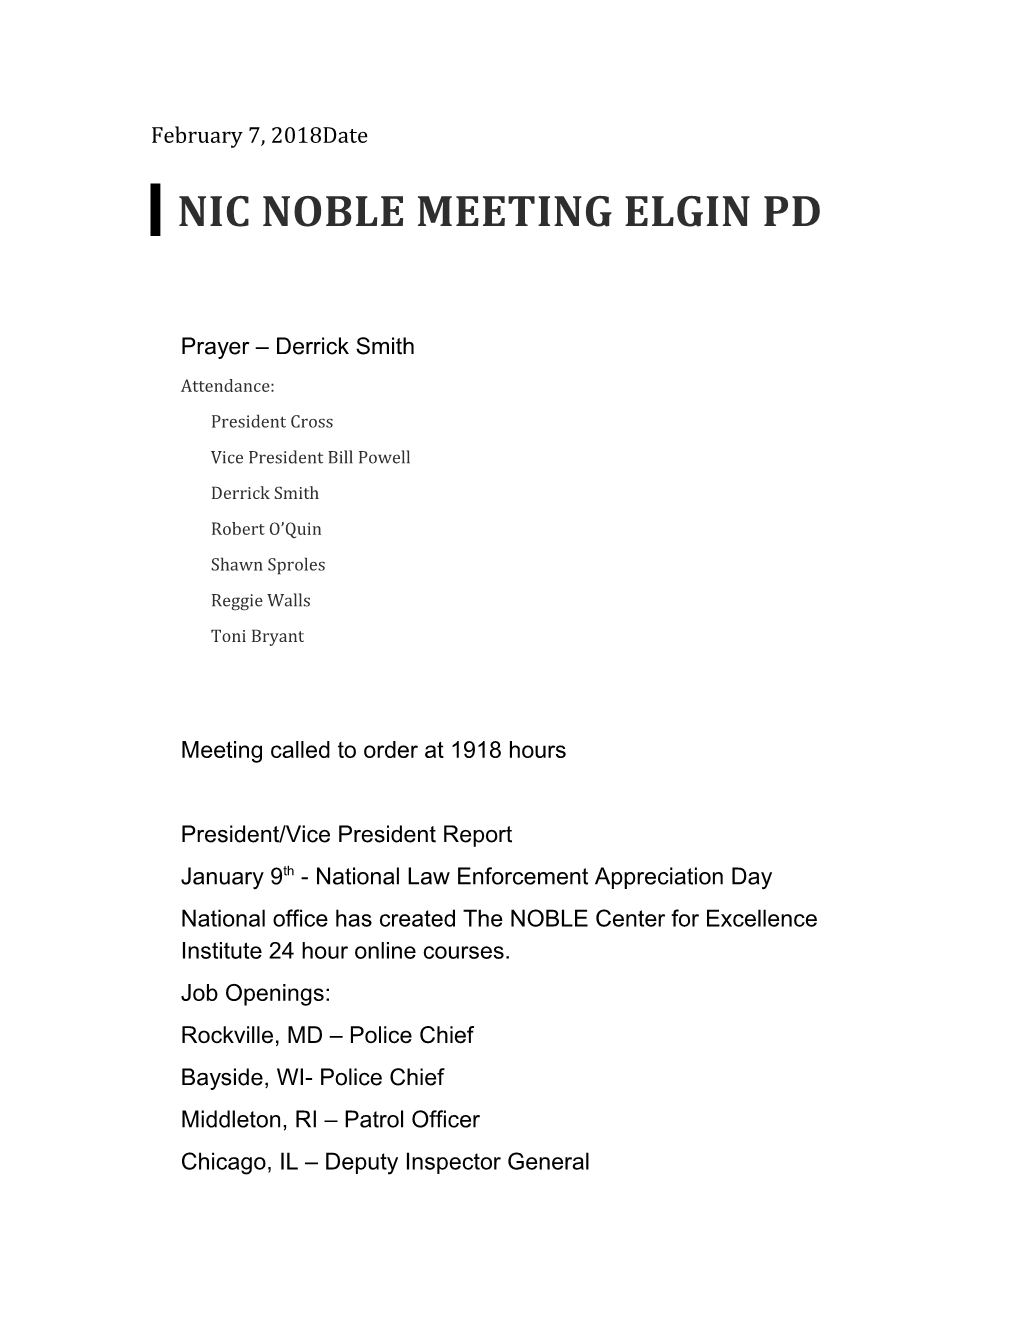 Nic Noble Meeting Elgin PD